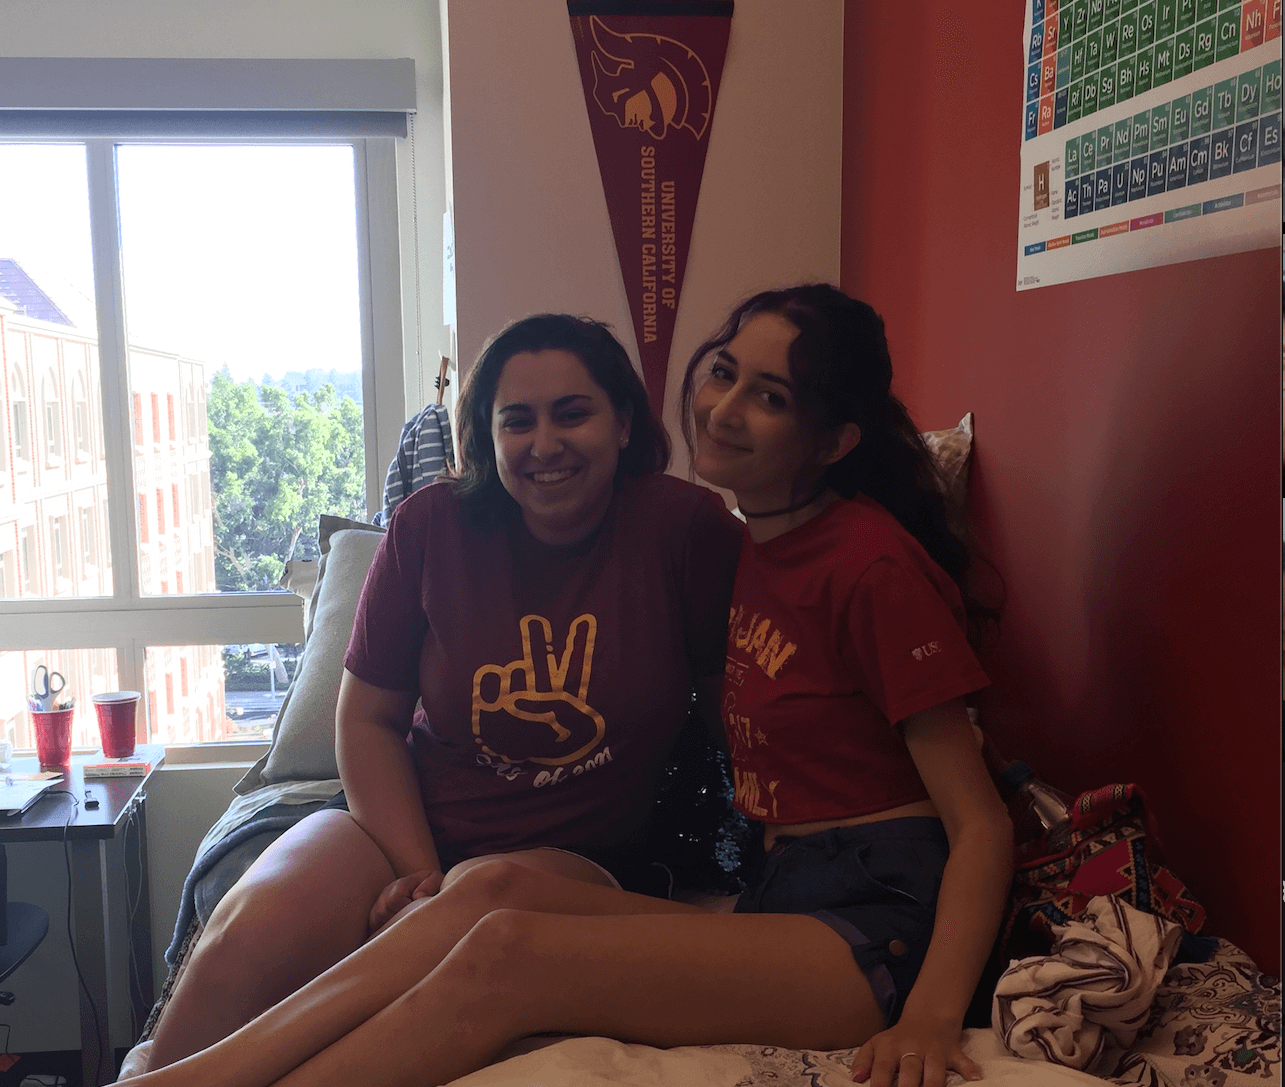 Housing & Living at USC!